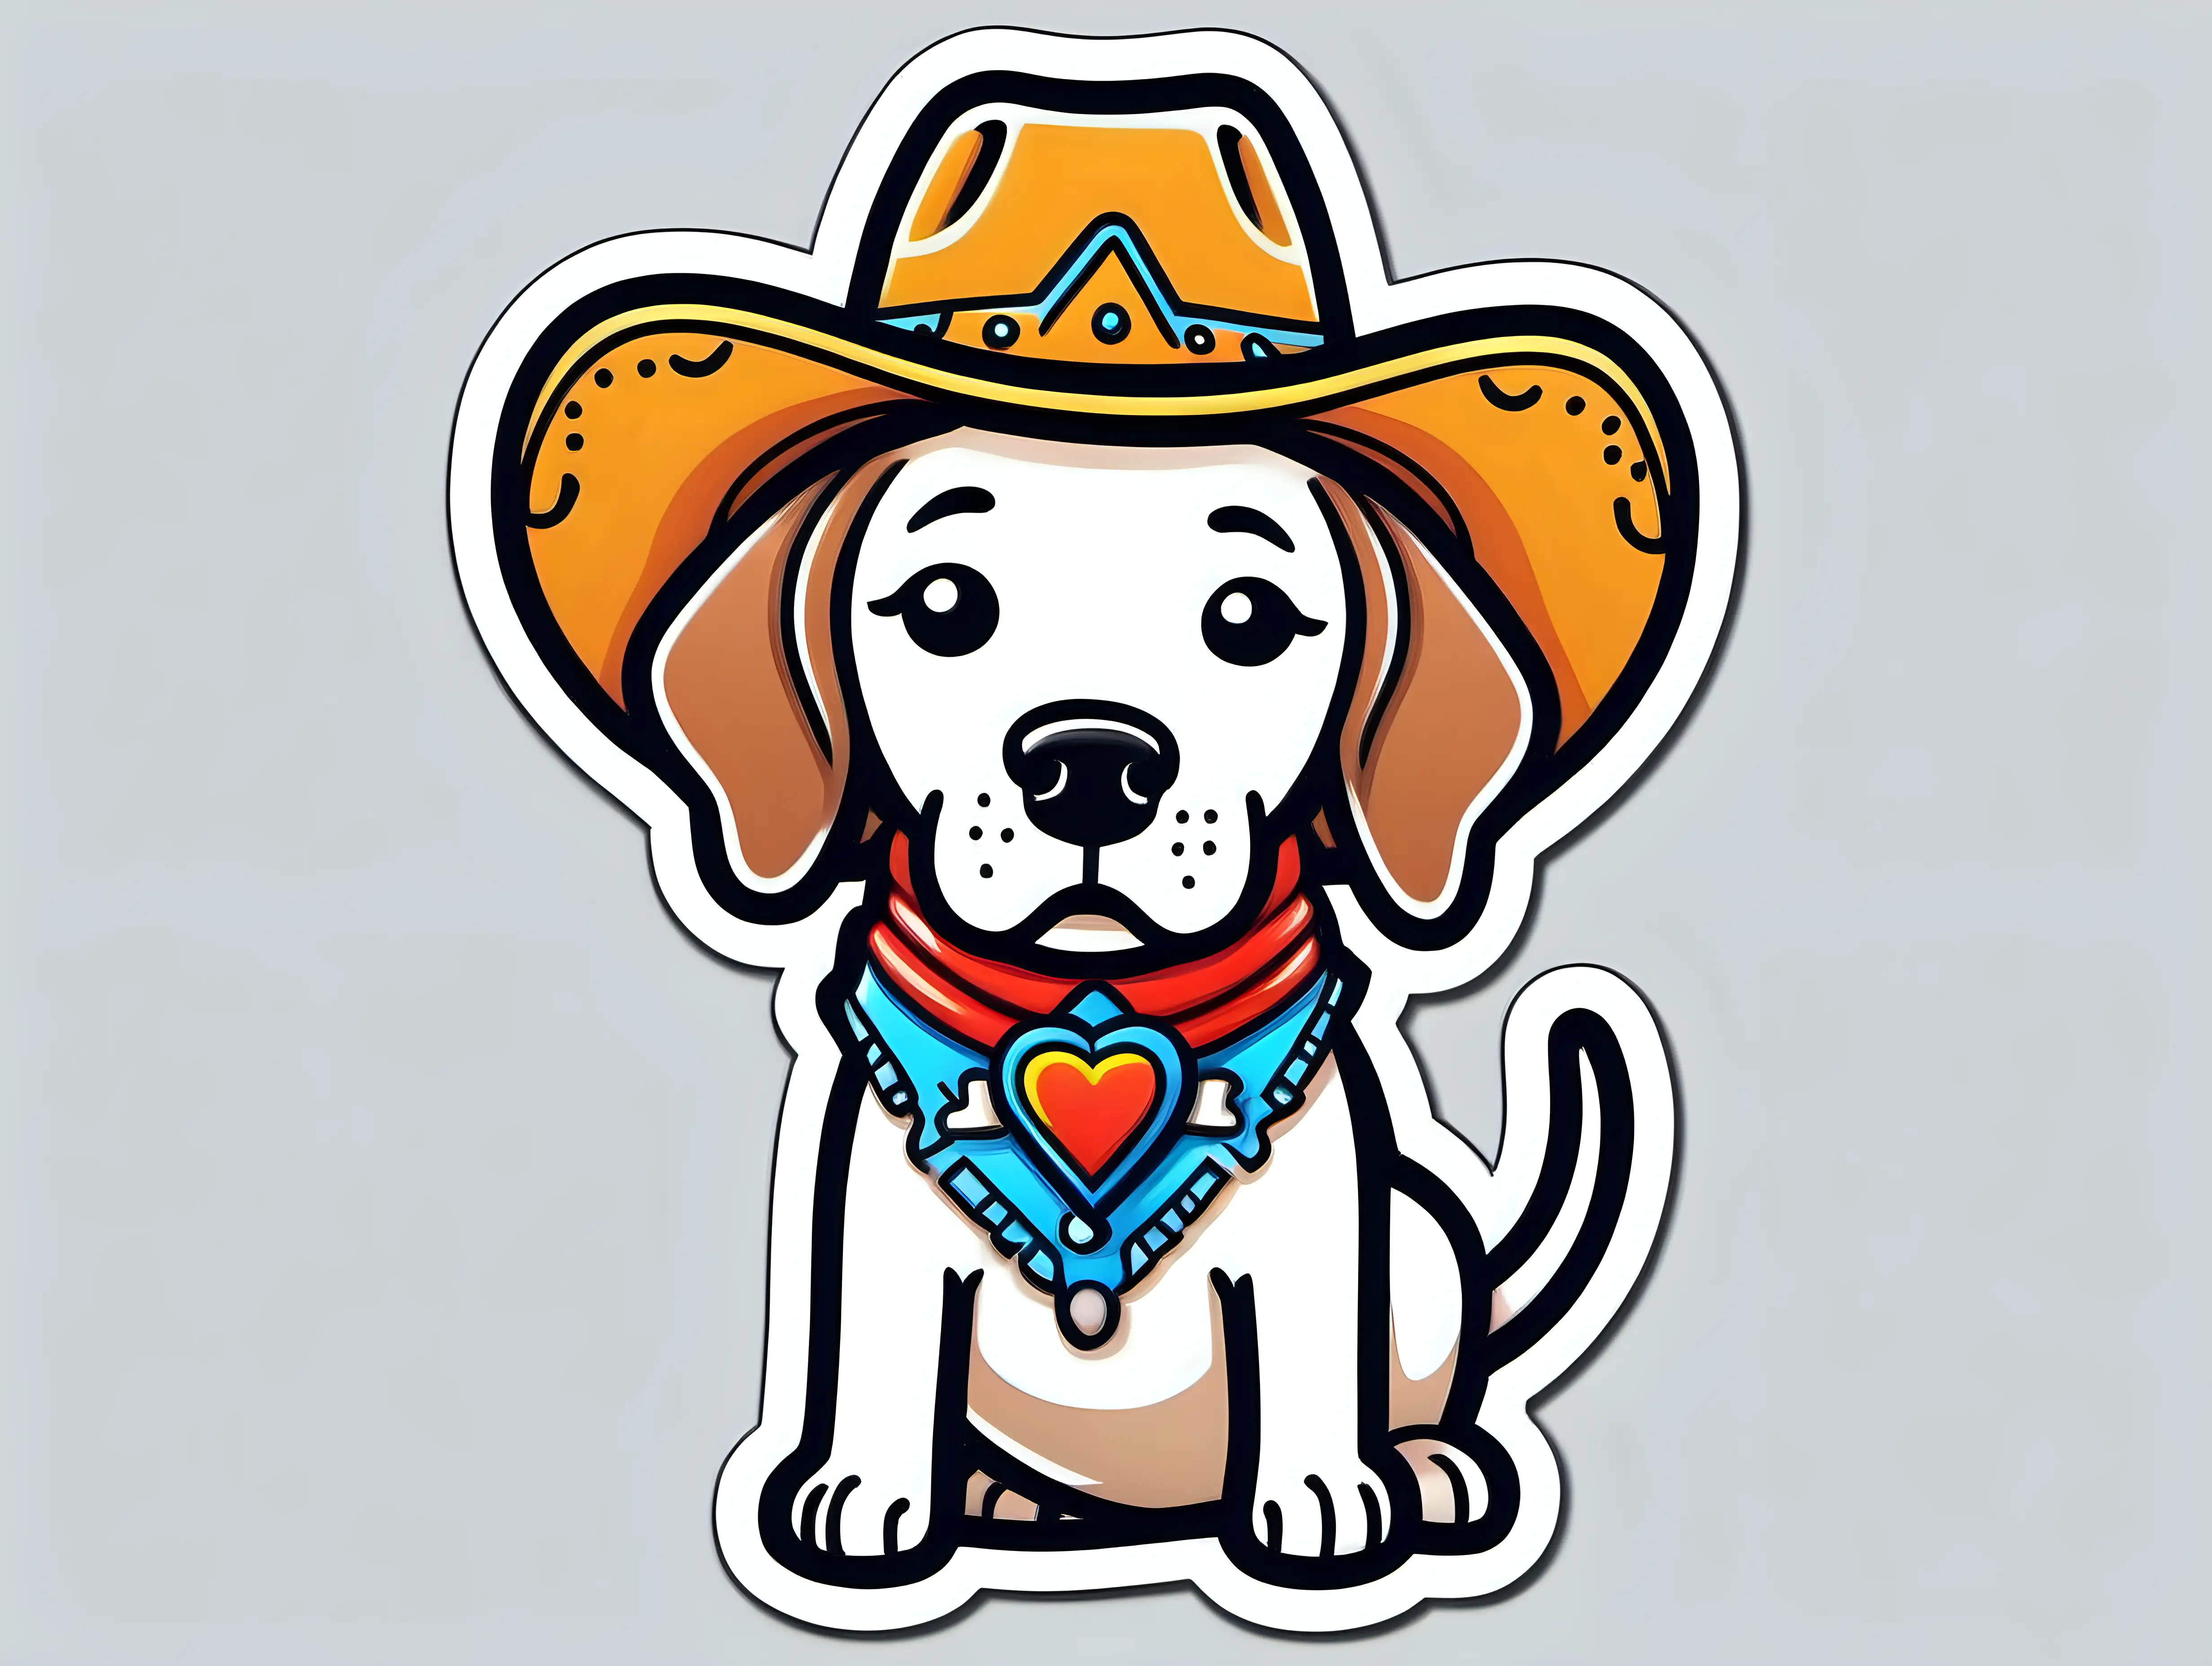 Cowgirl Labrador Retriever Cartoon Sticker in Vibrant Keith Haring Style